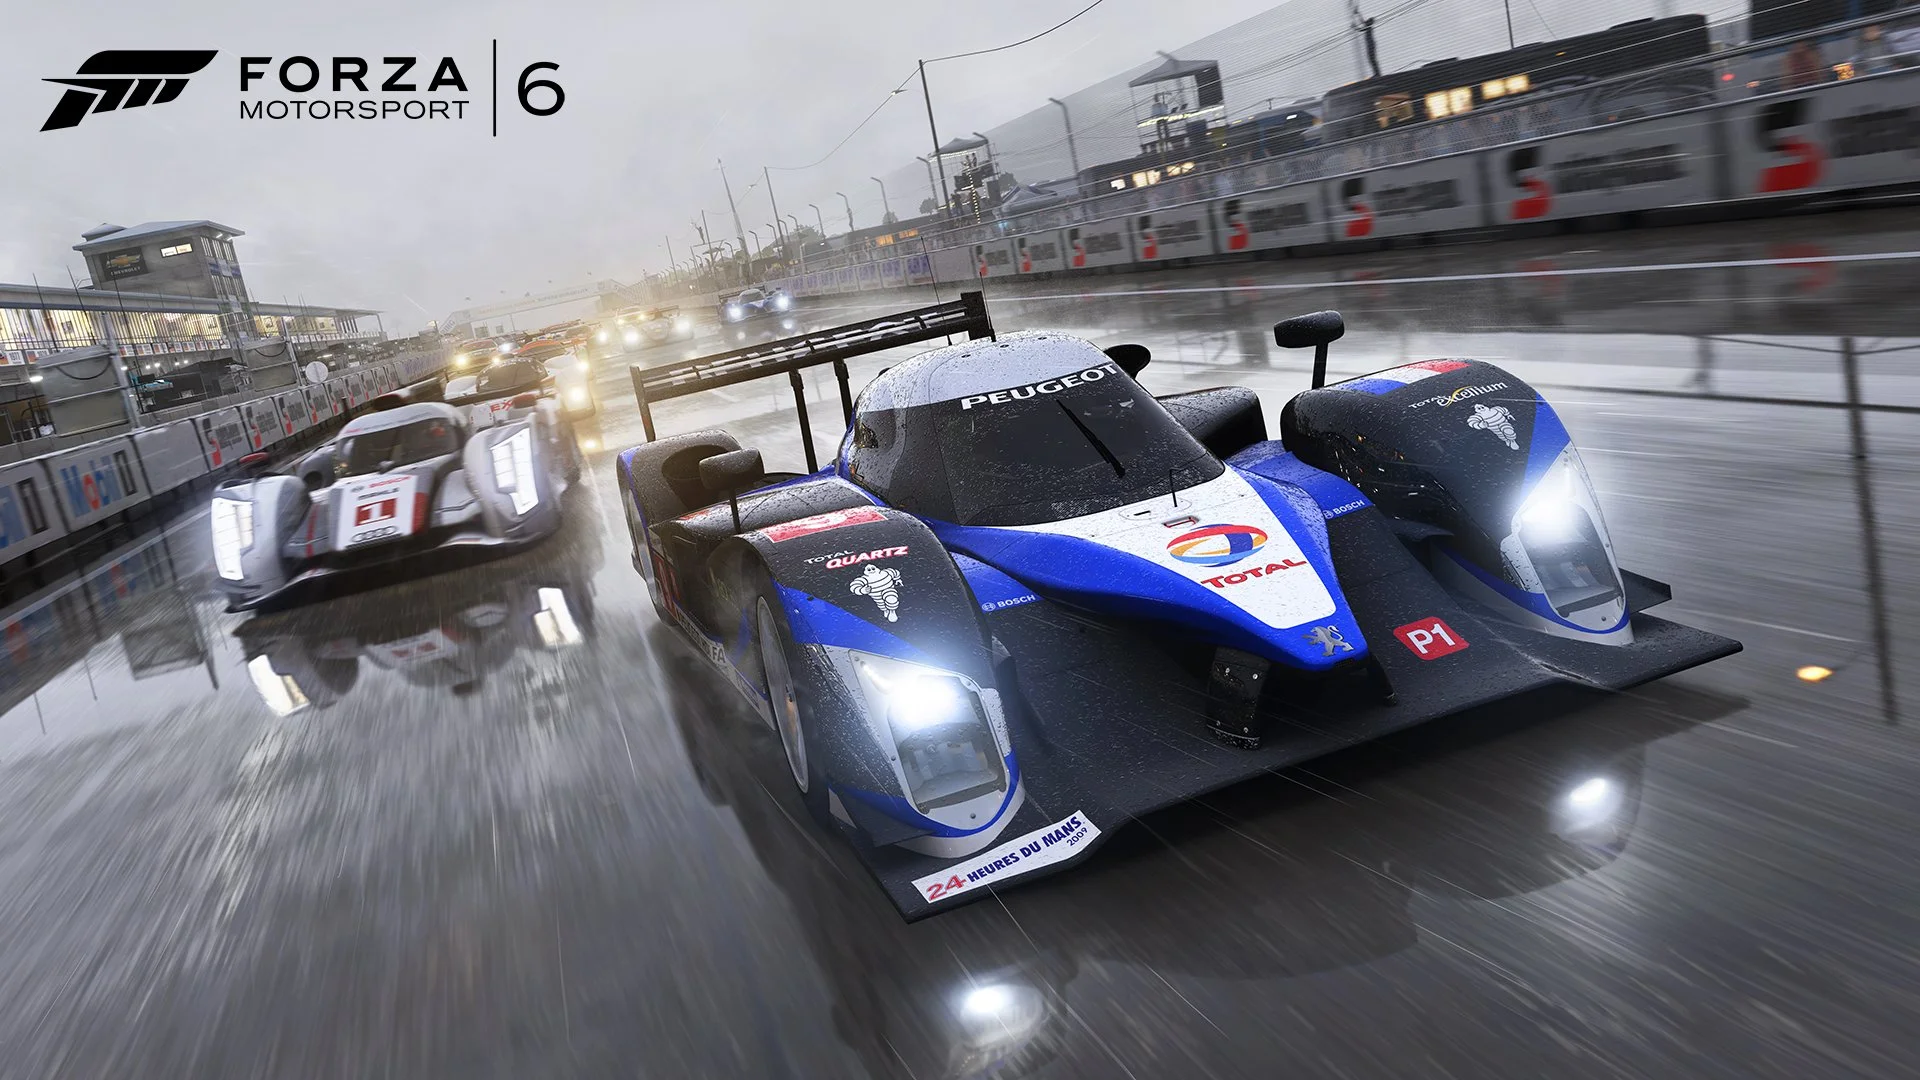 Главная причина для покупки Forza Motorsport 6 — вибрация джойстика  - фото 4